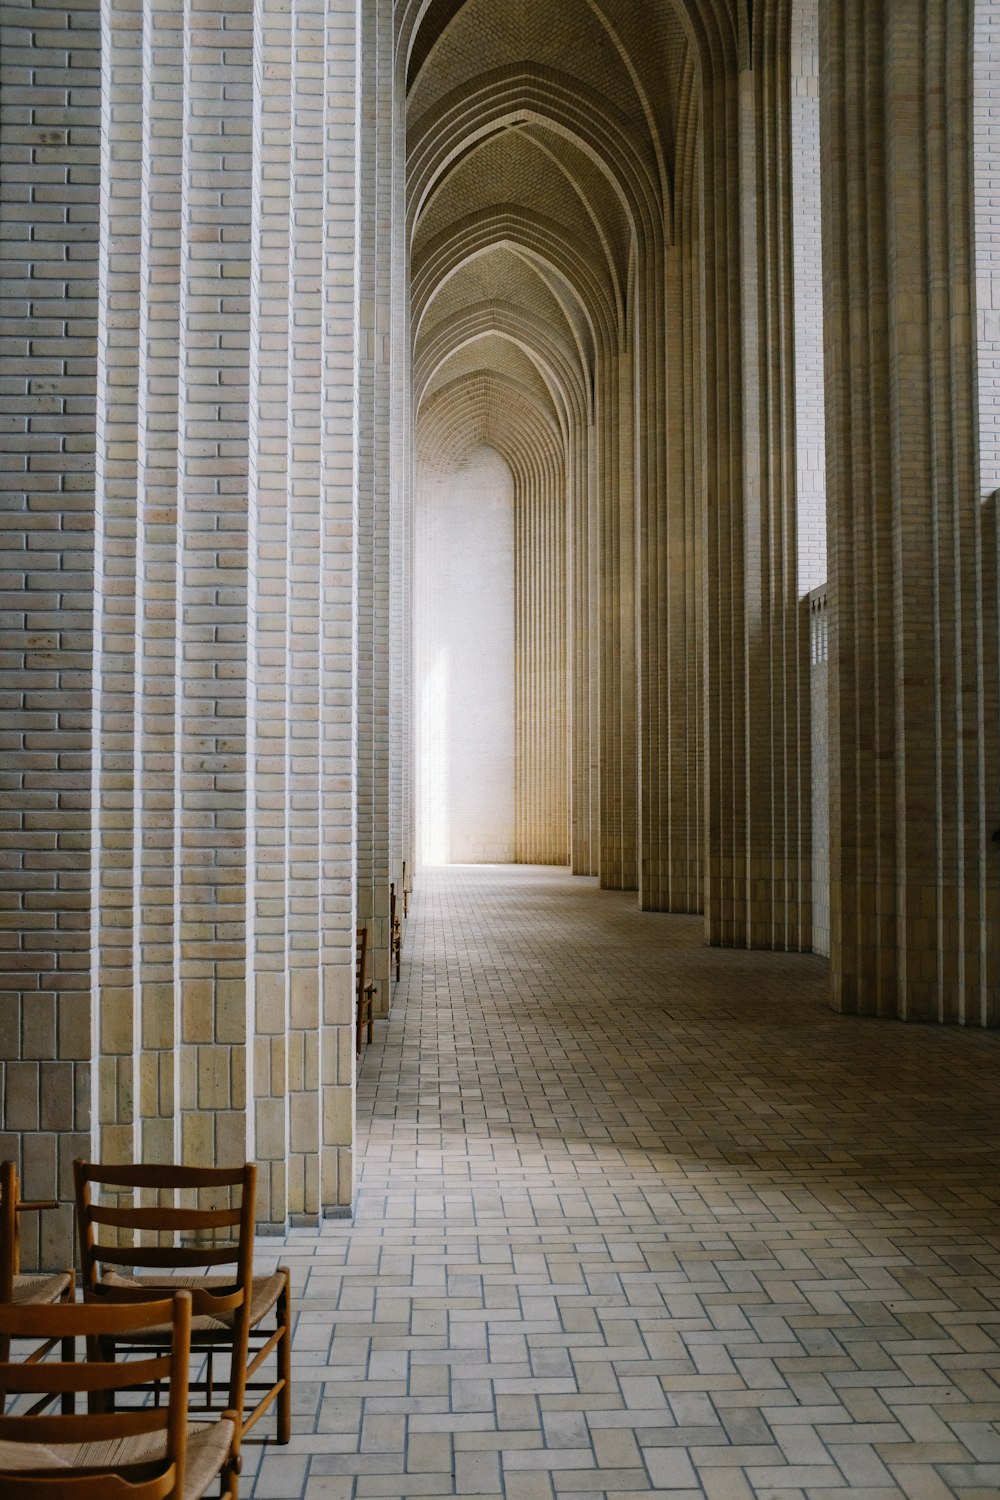 a brick hallway with a chair